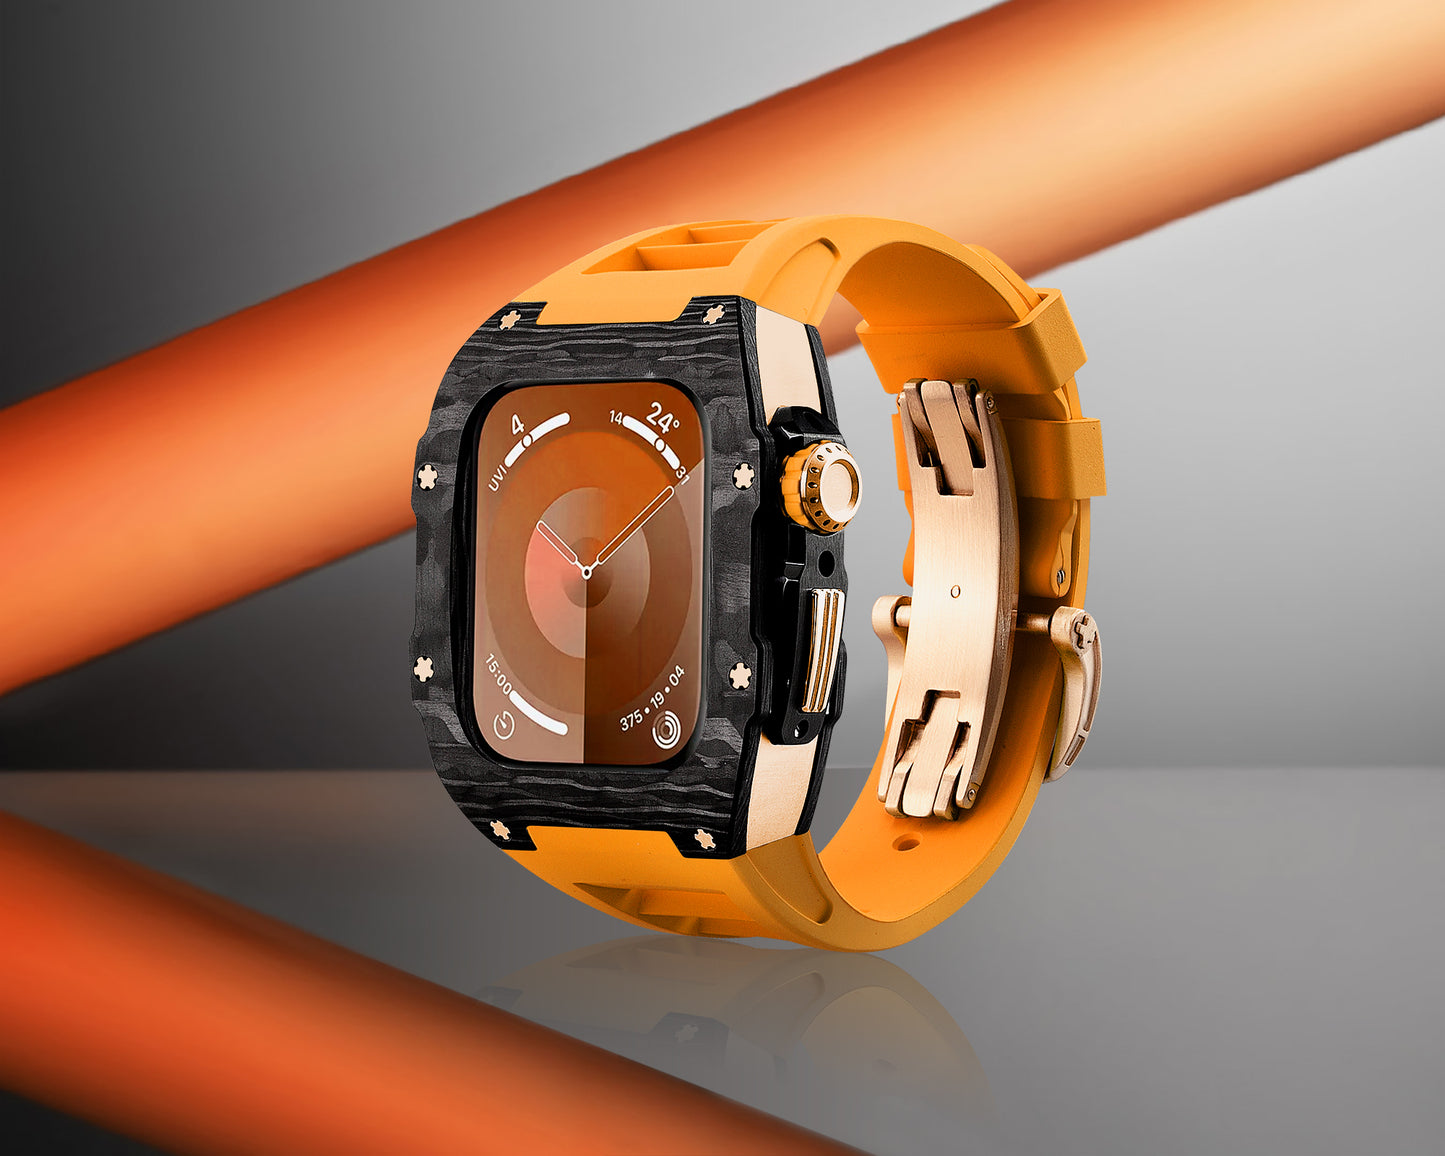 Apple Watch Case for Series 4/5/6/7/8/SE - Carbon Fiber Ti Rose Gold Case + Orange Fluoro Strap